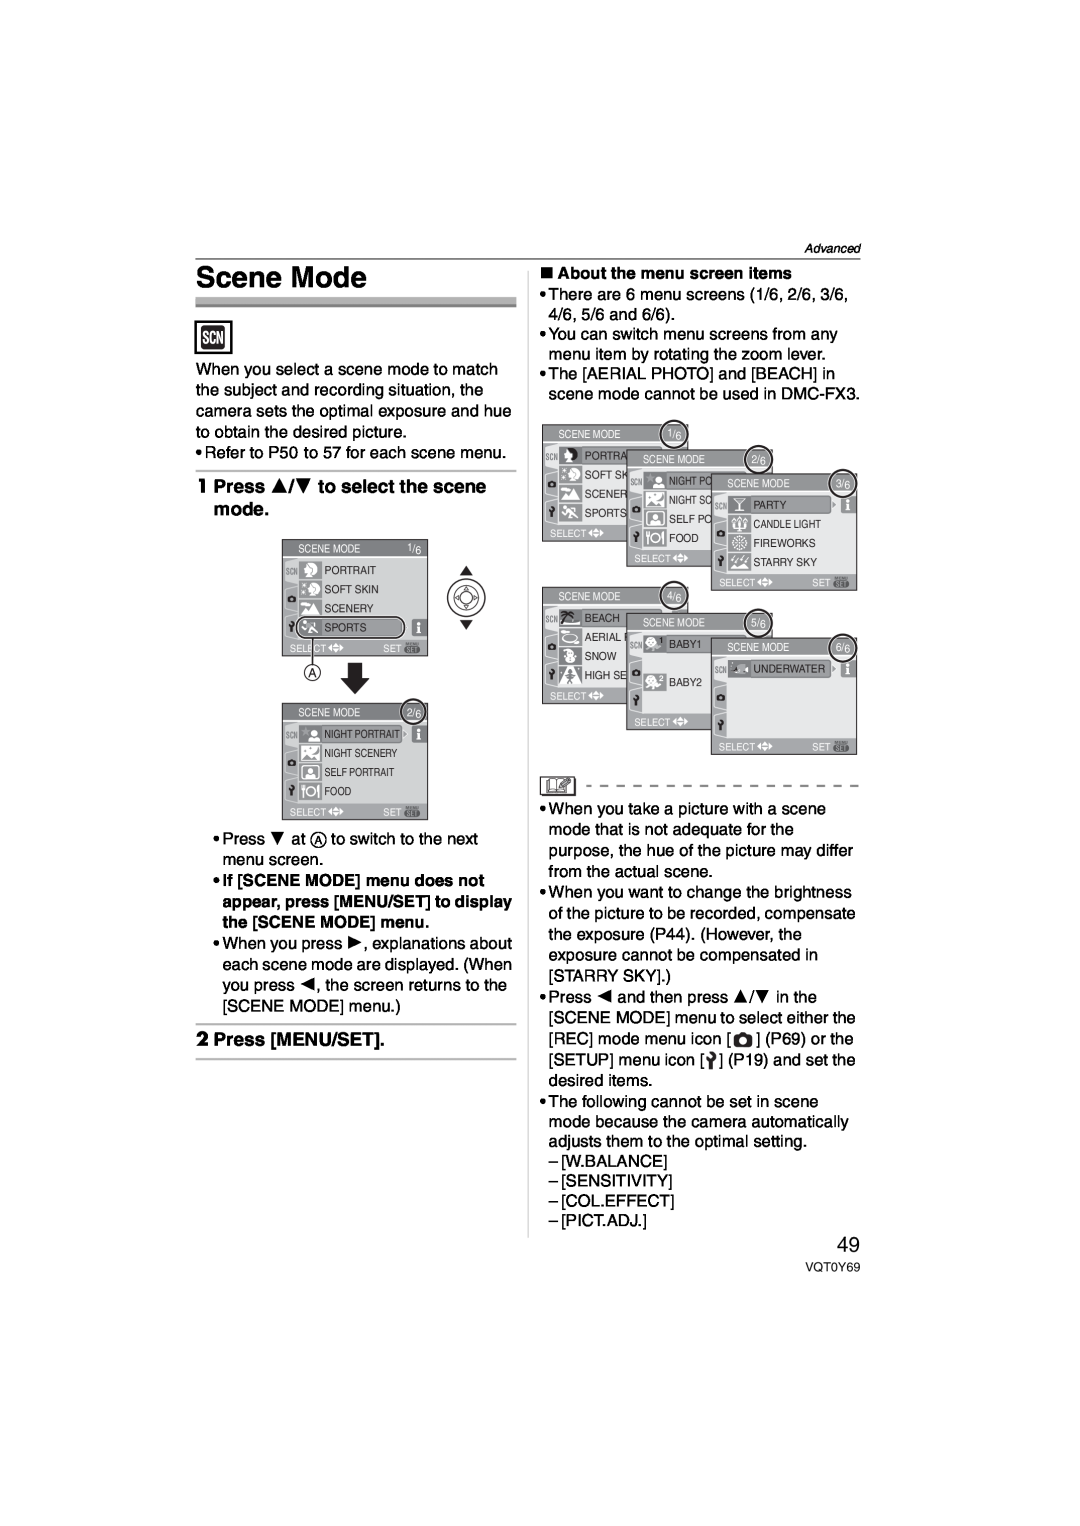 Panasonic DMC-FX3, DMC-FX07 Scene Mode, Press 3/4 to select the scene mode, Press MENU/SET, About the menu screen items 